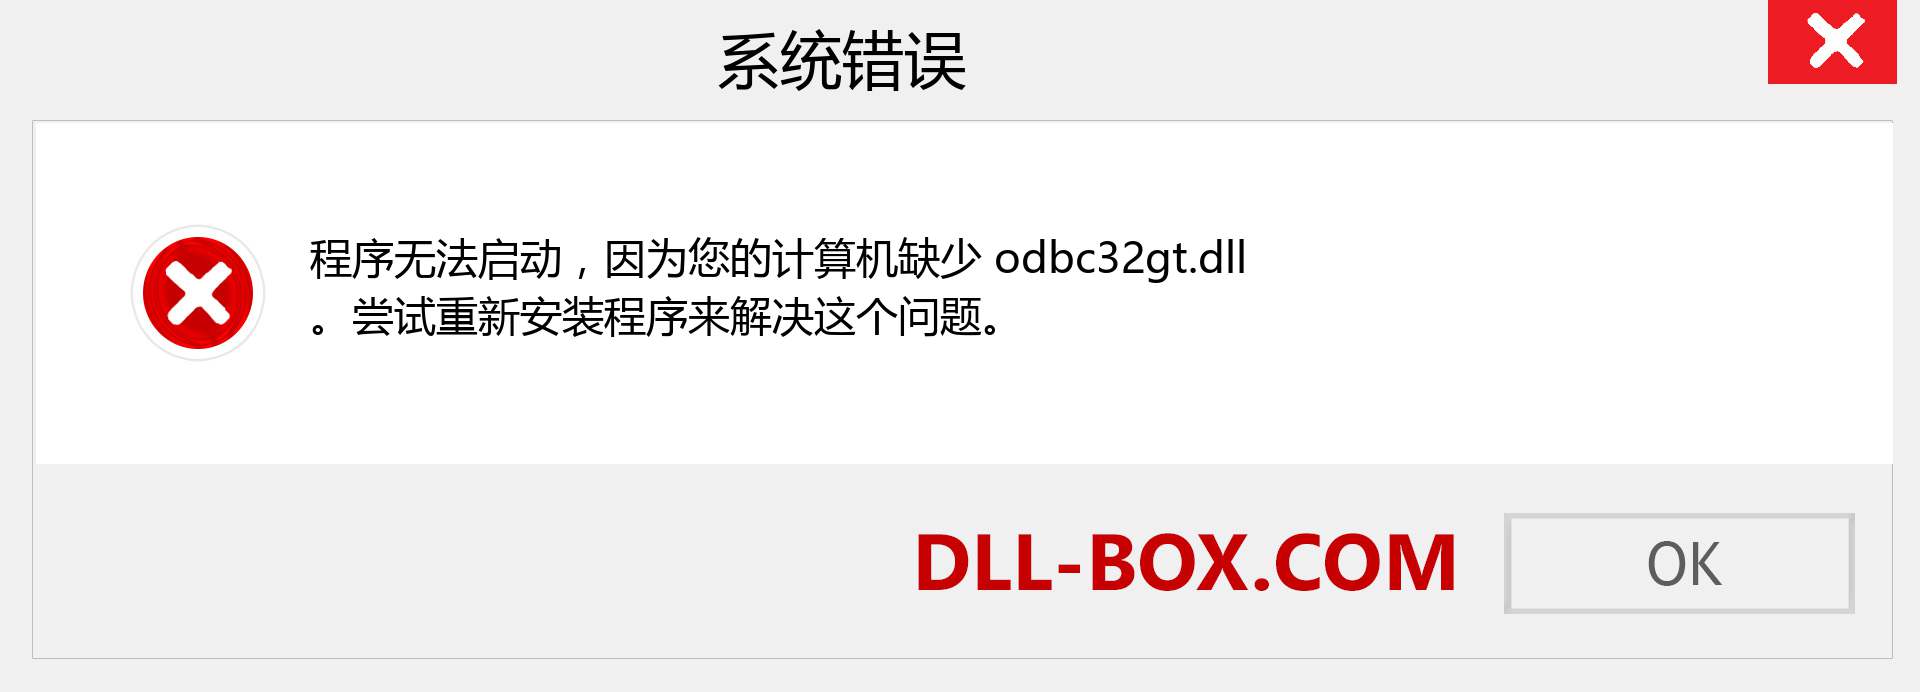 odbc32gt.dll 文件丢失？。 适用于 Windows 7、8、10 的下载 - 修复 Windows、照片、图像上的 odbc32gt dll 丢失错误